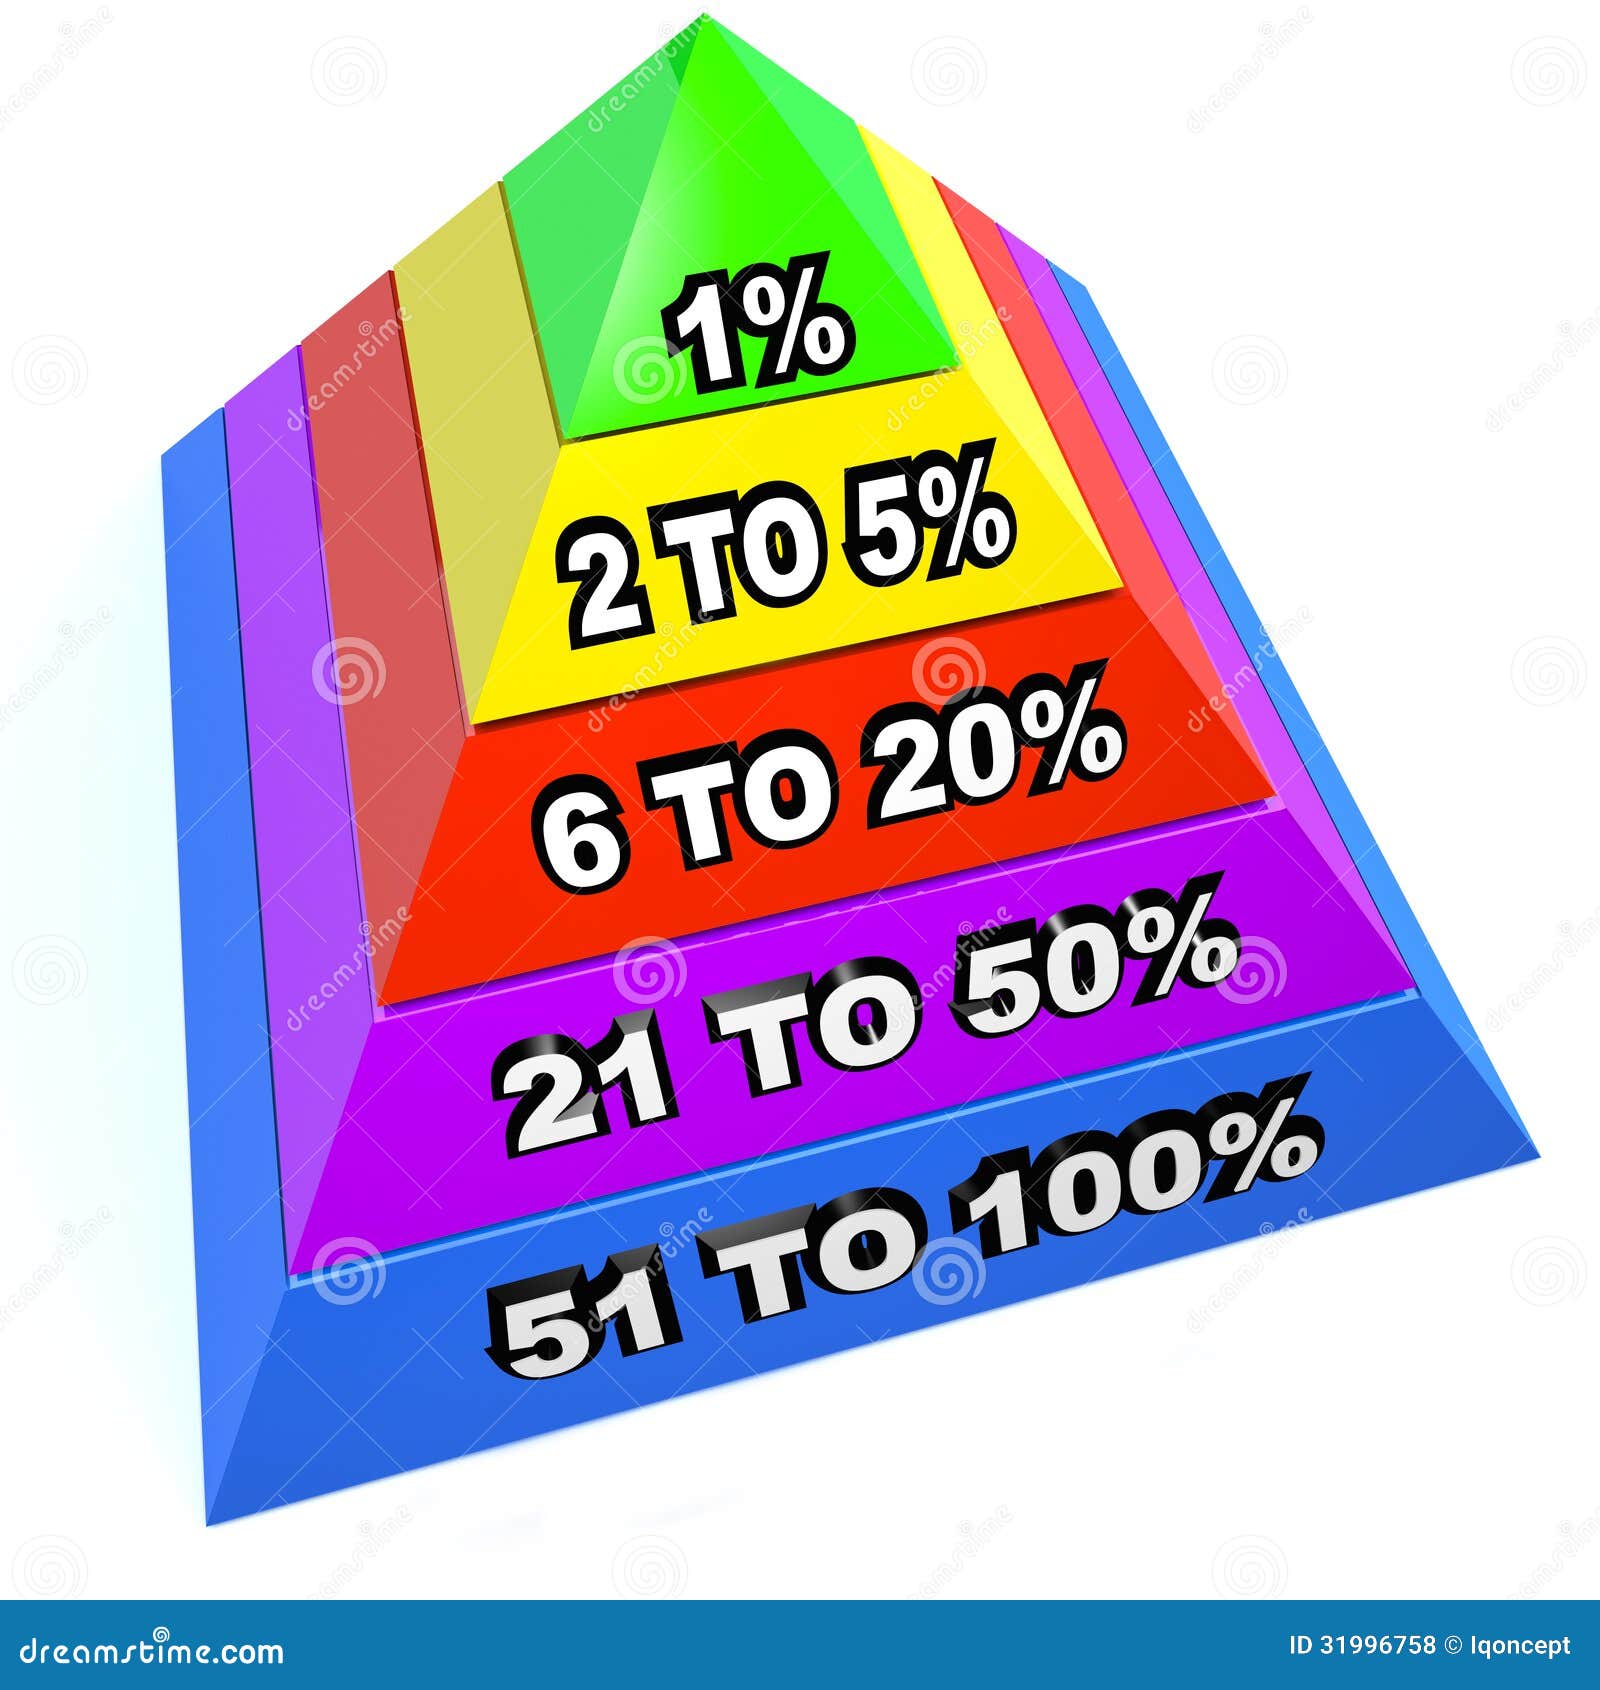 top 1% percent pyramid levels upper class dominant minority